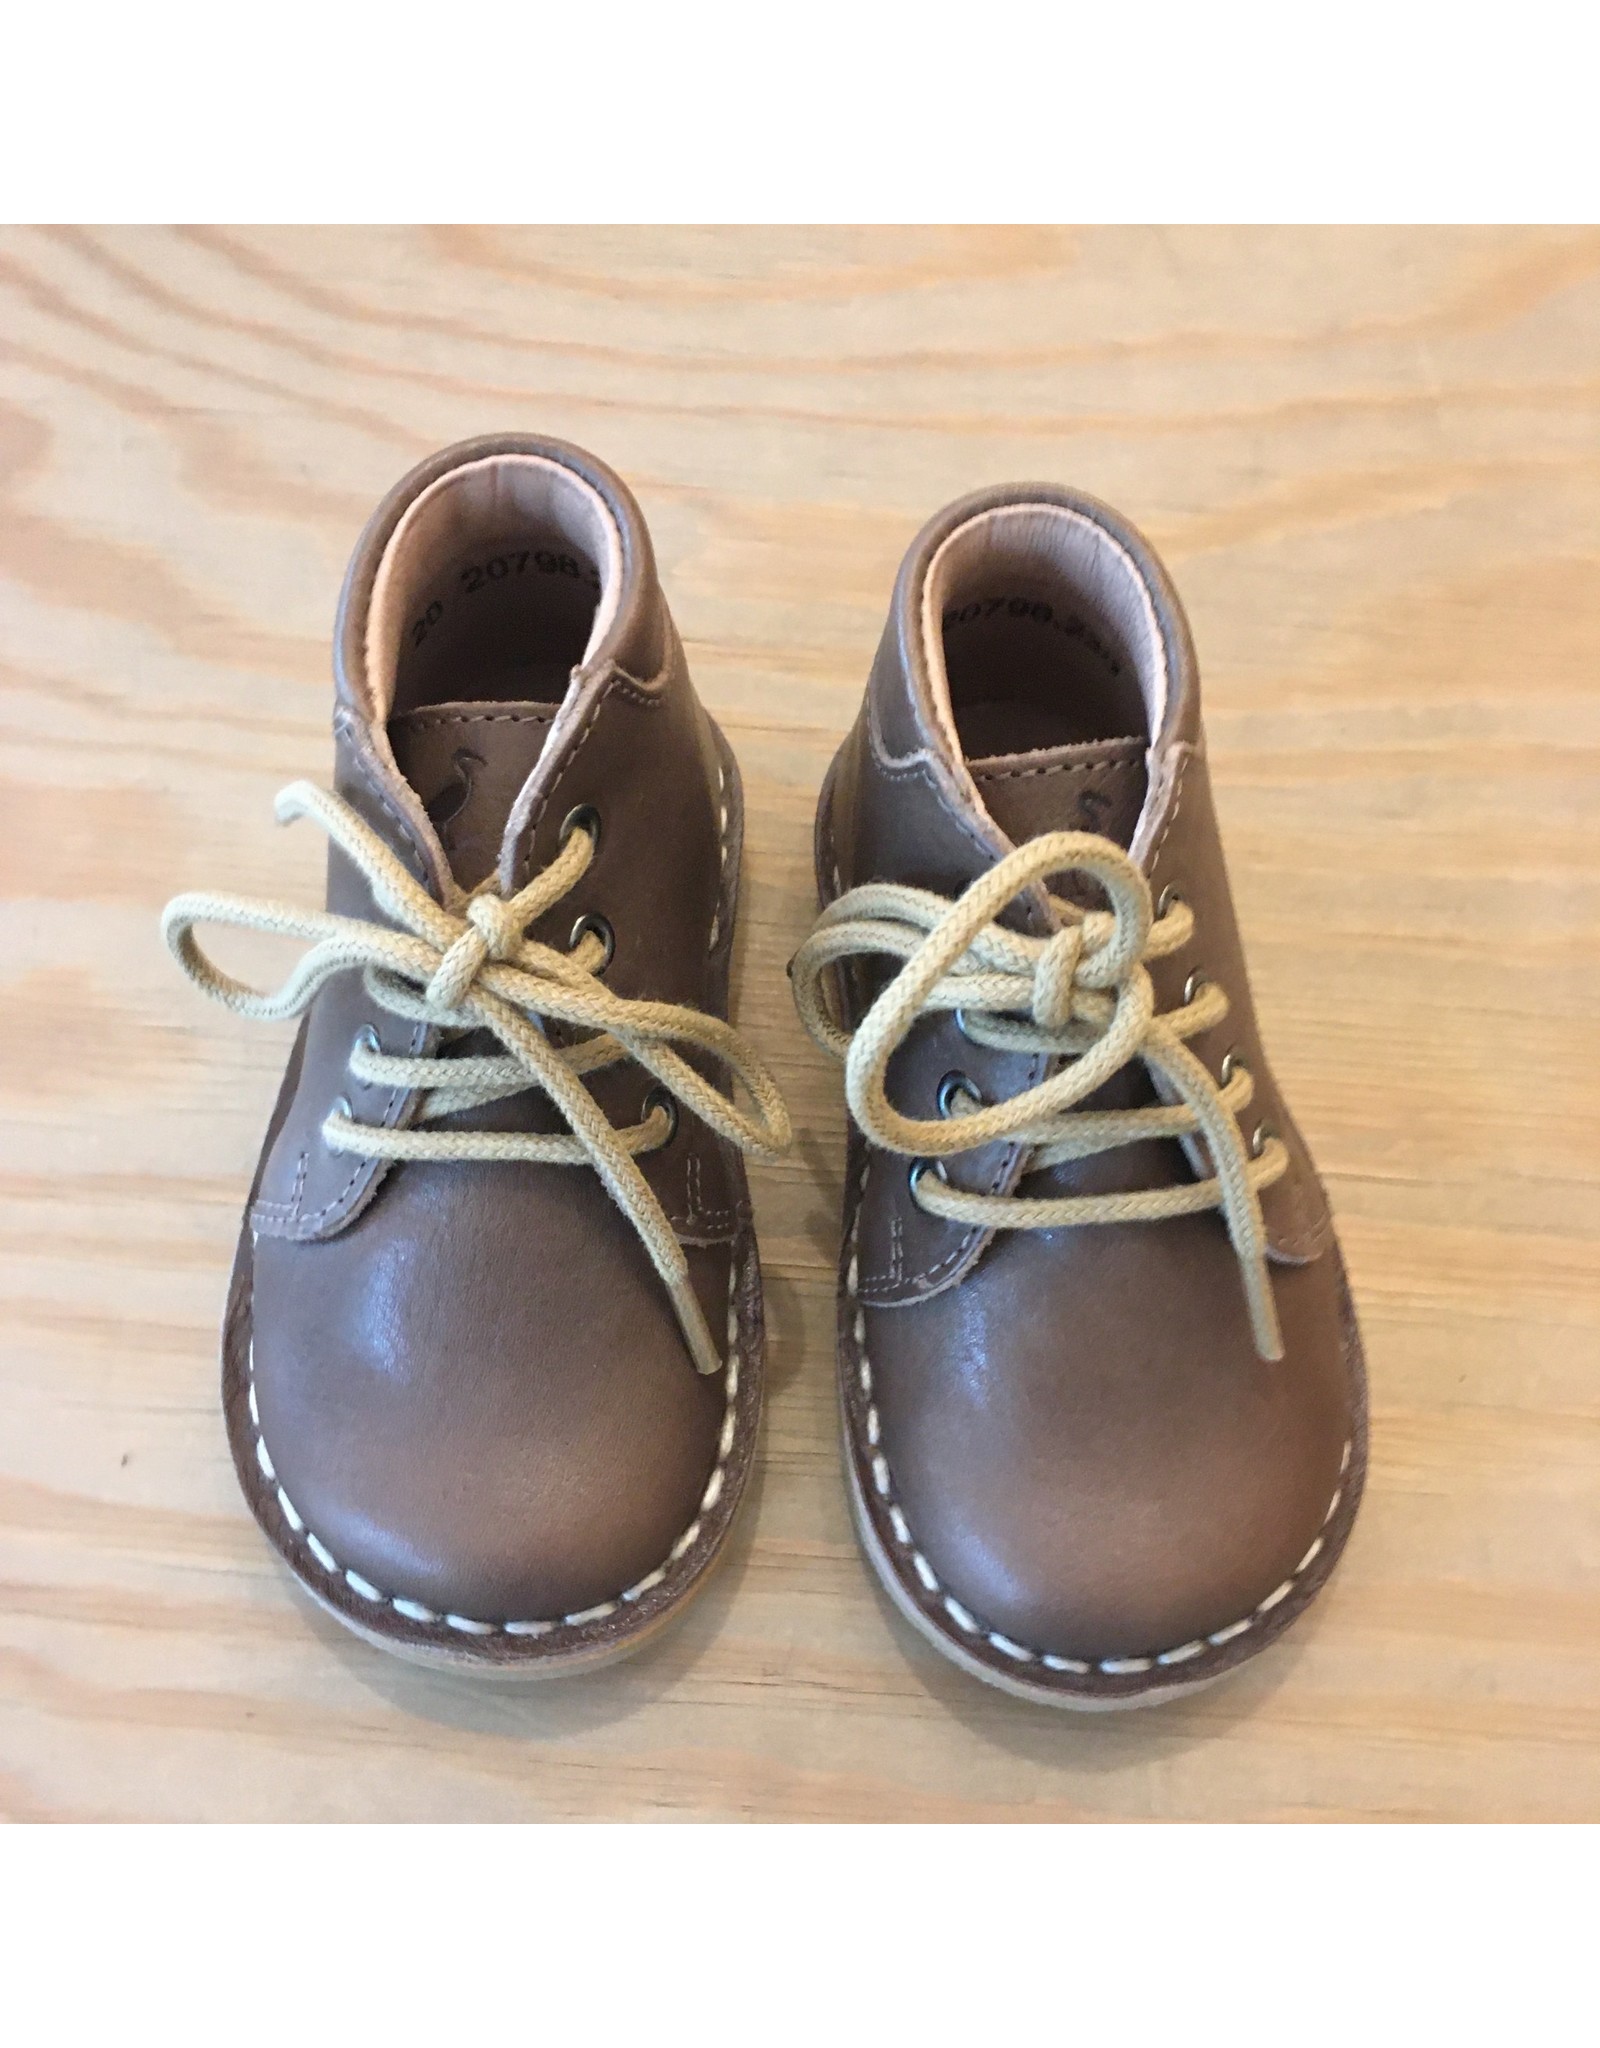 desert boot laces